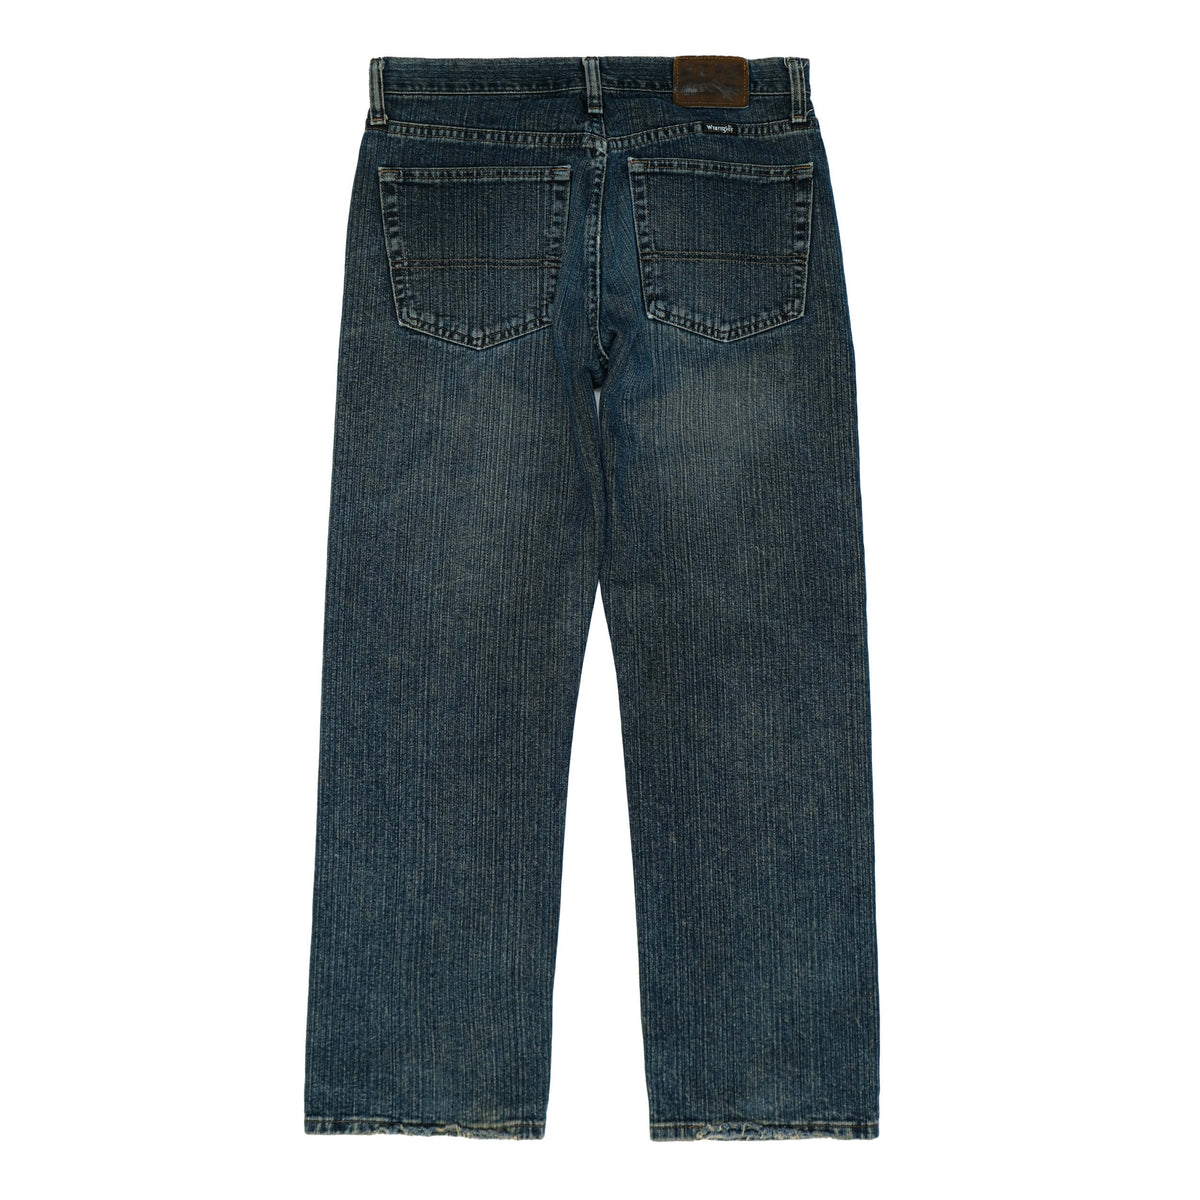 reWork Wrangler Jeans (32x30)